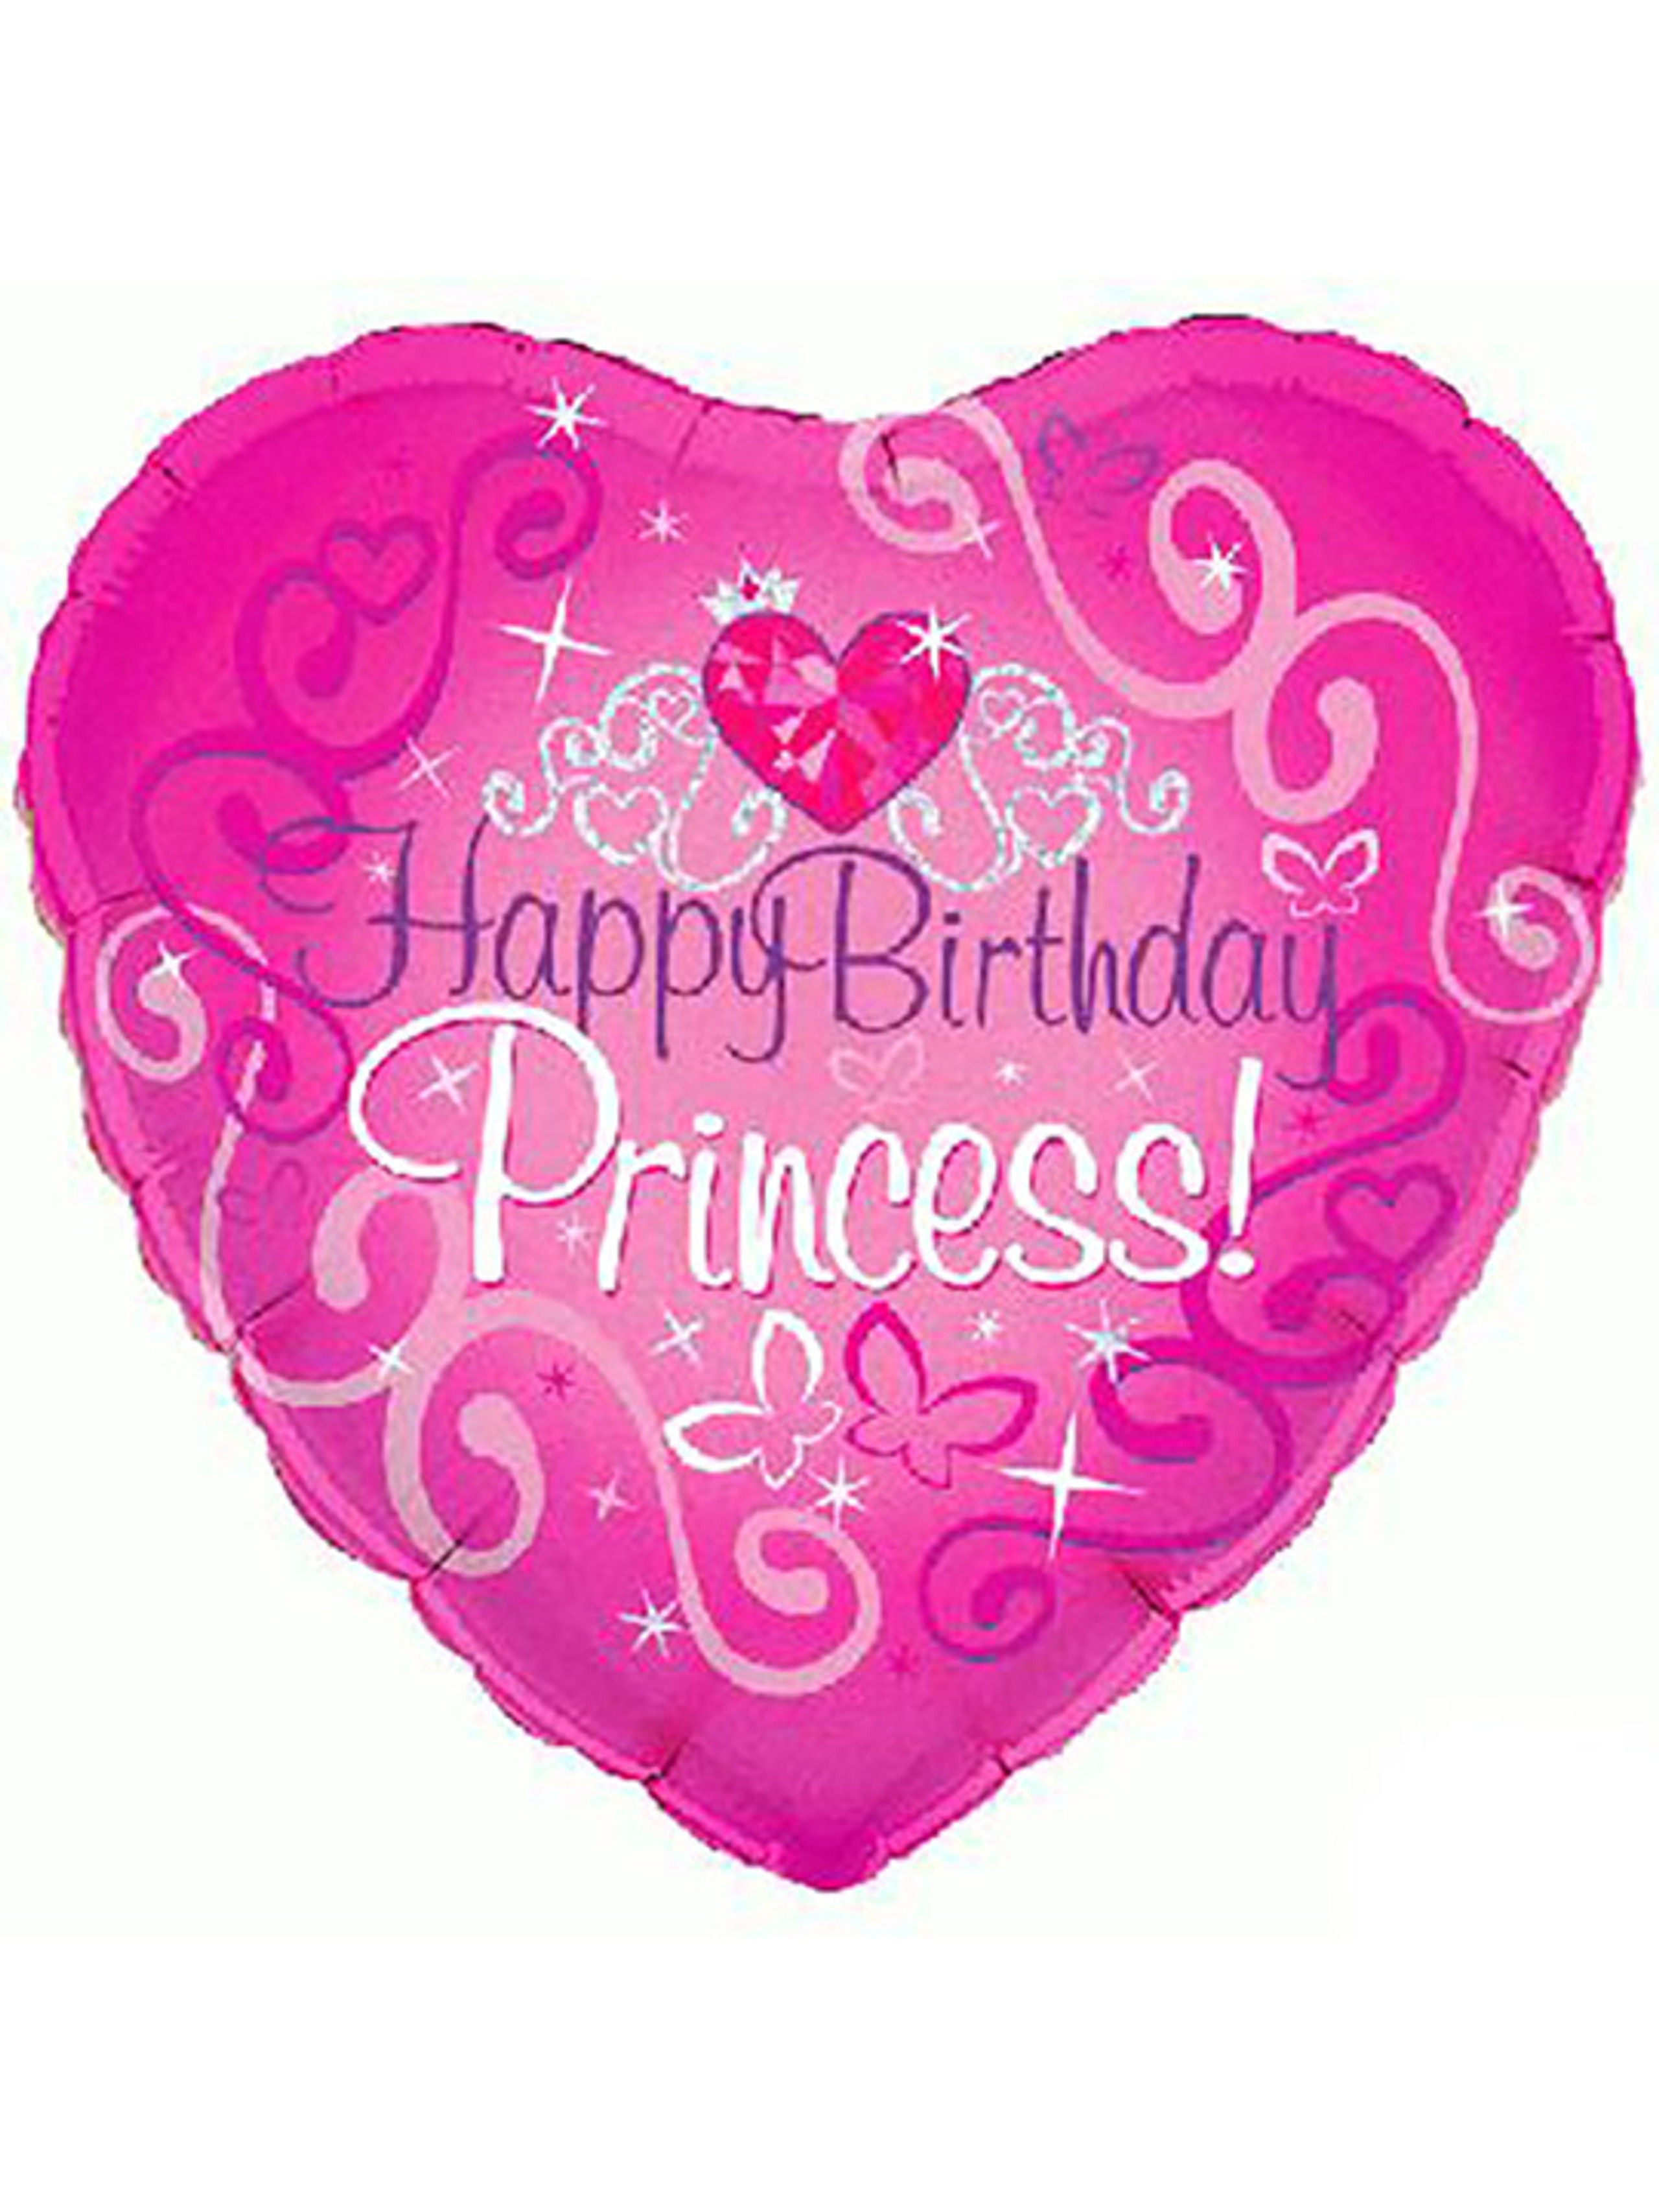 Happy Birthday Princess Heart Balloon 18 Foil